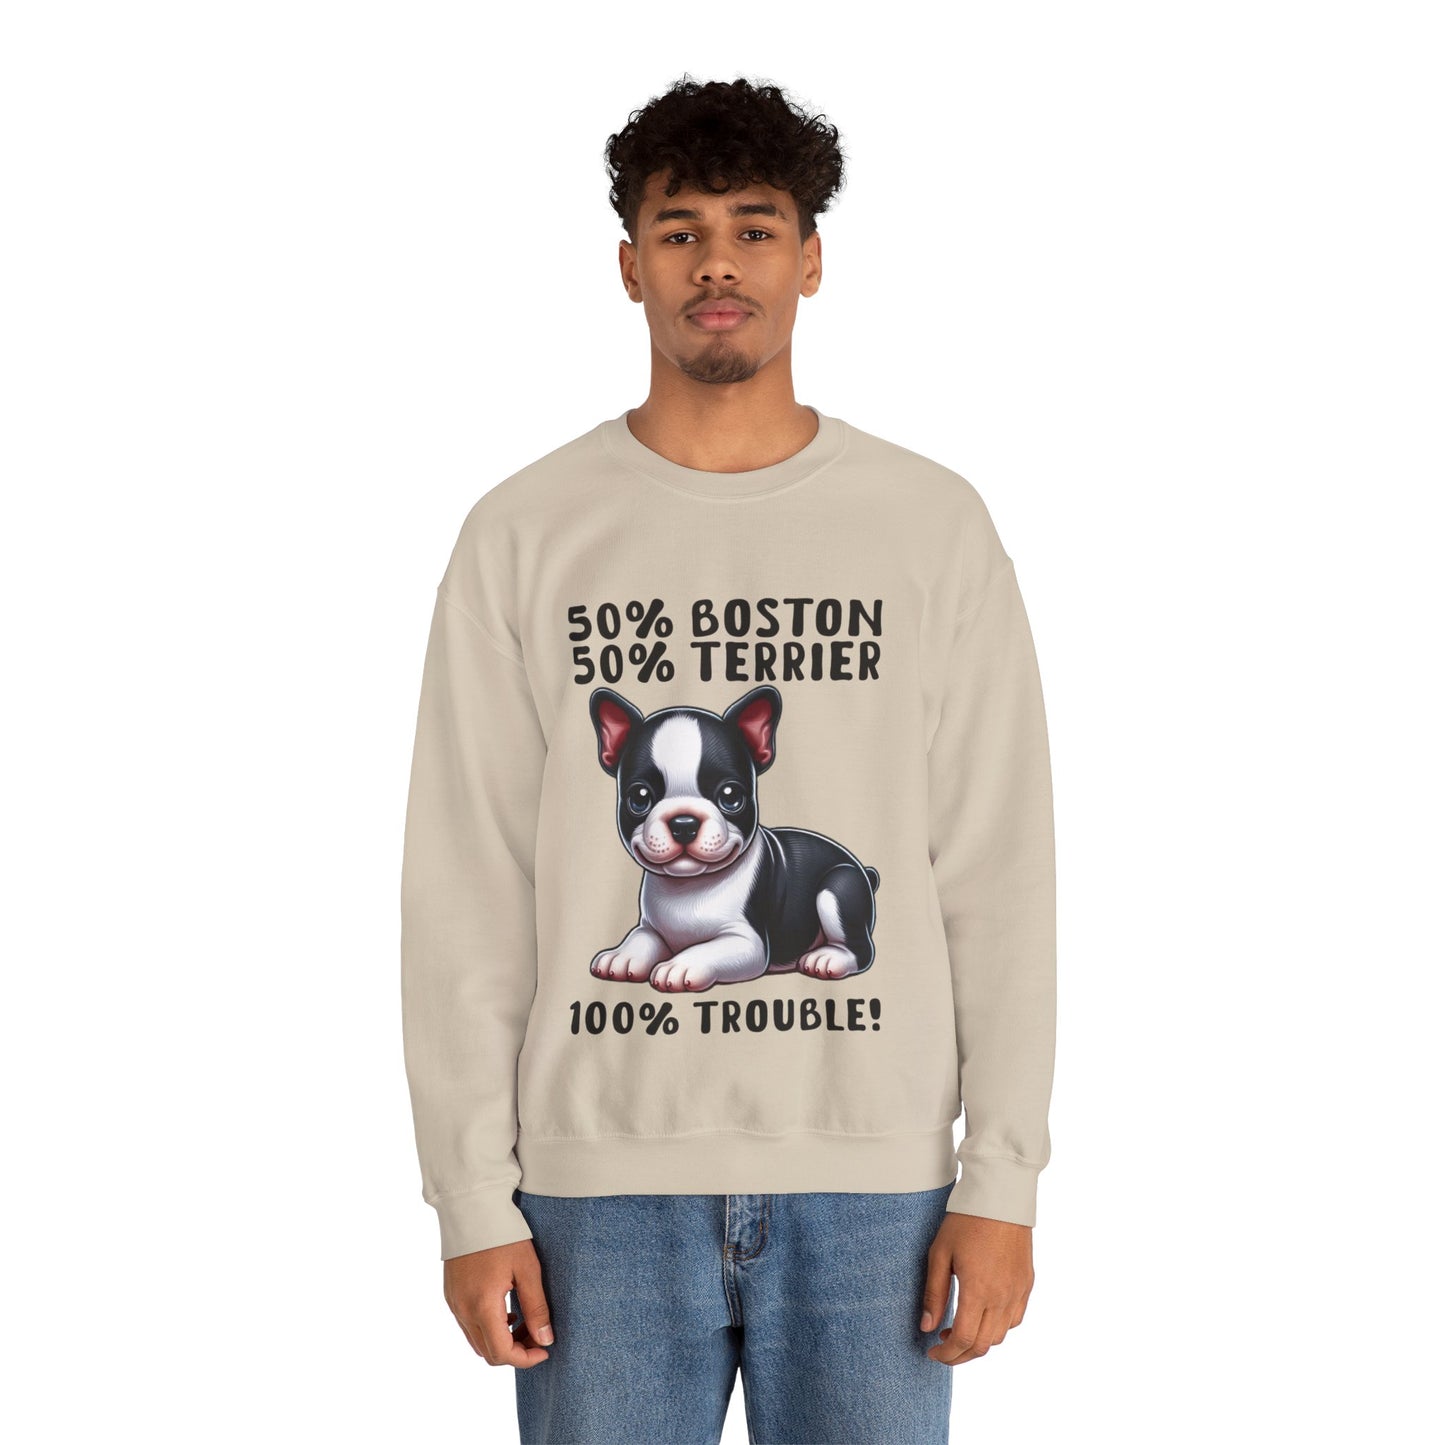 Pearl   - Unisex Sweatshirt for Boston Terrier lovers